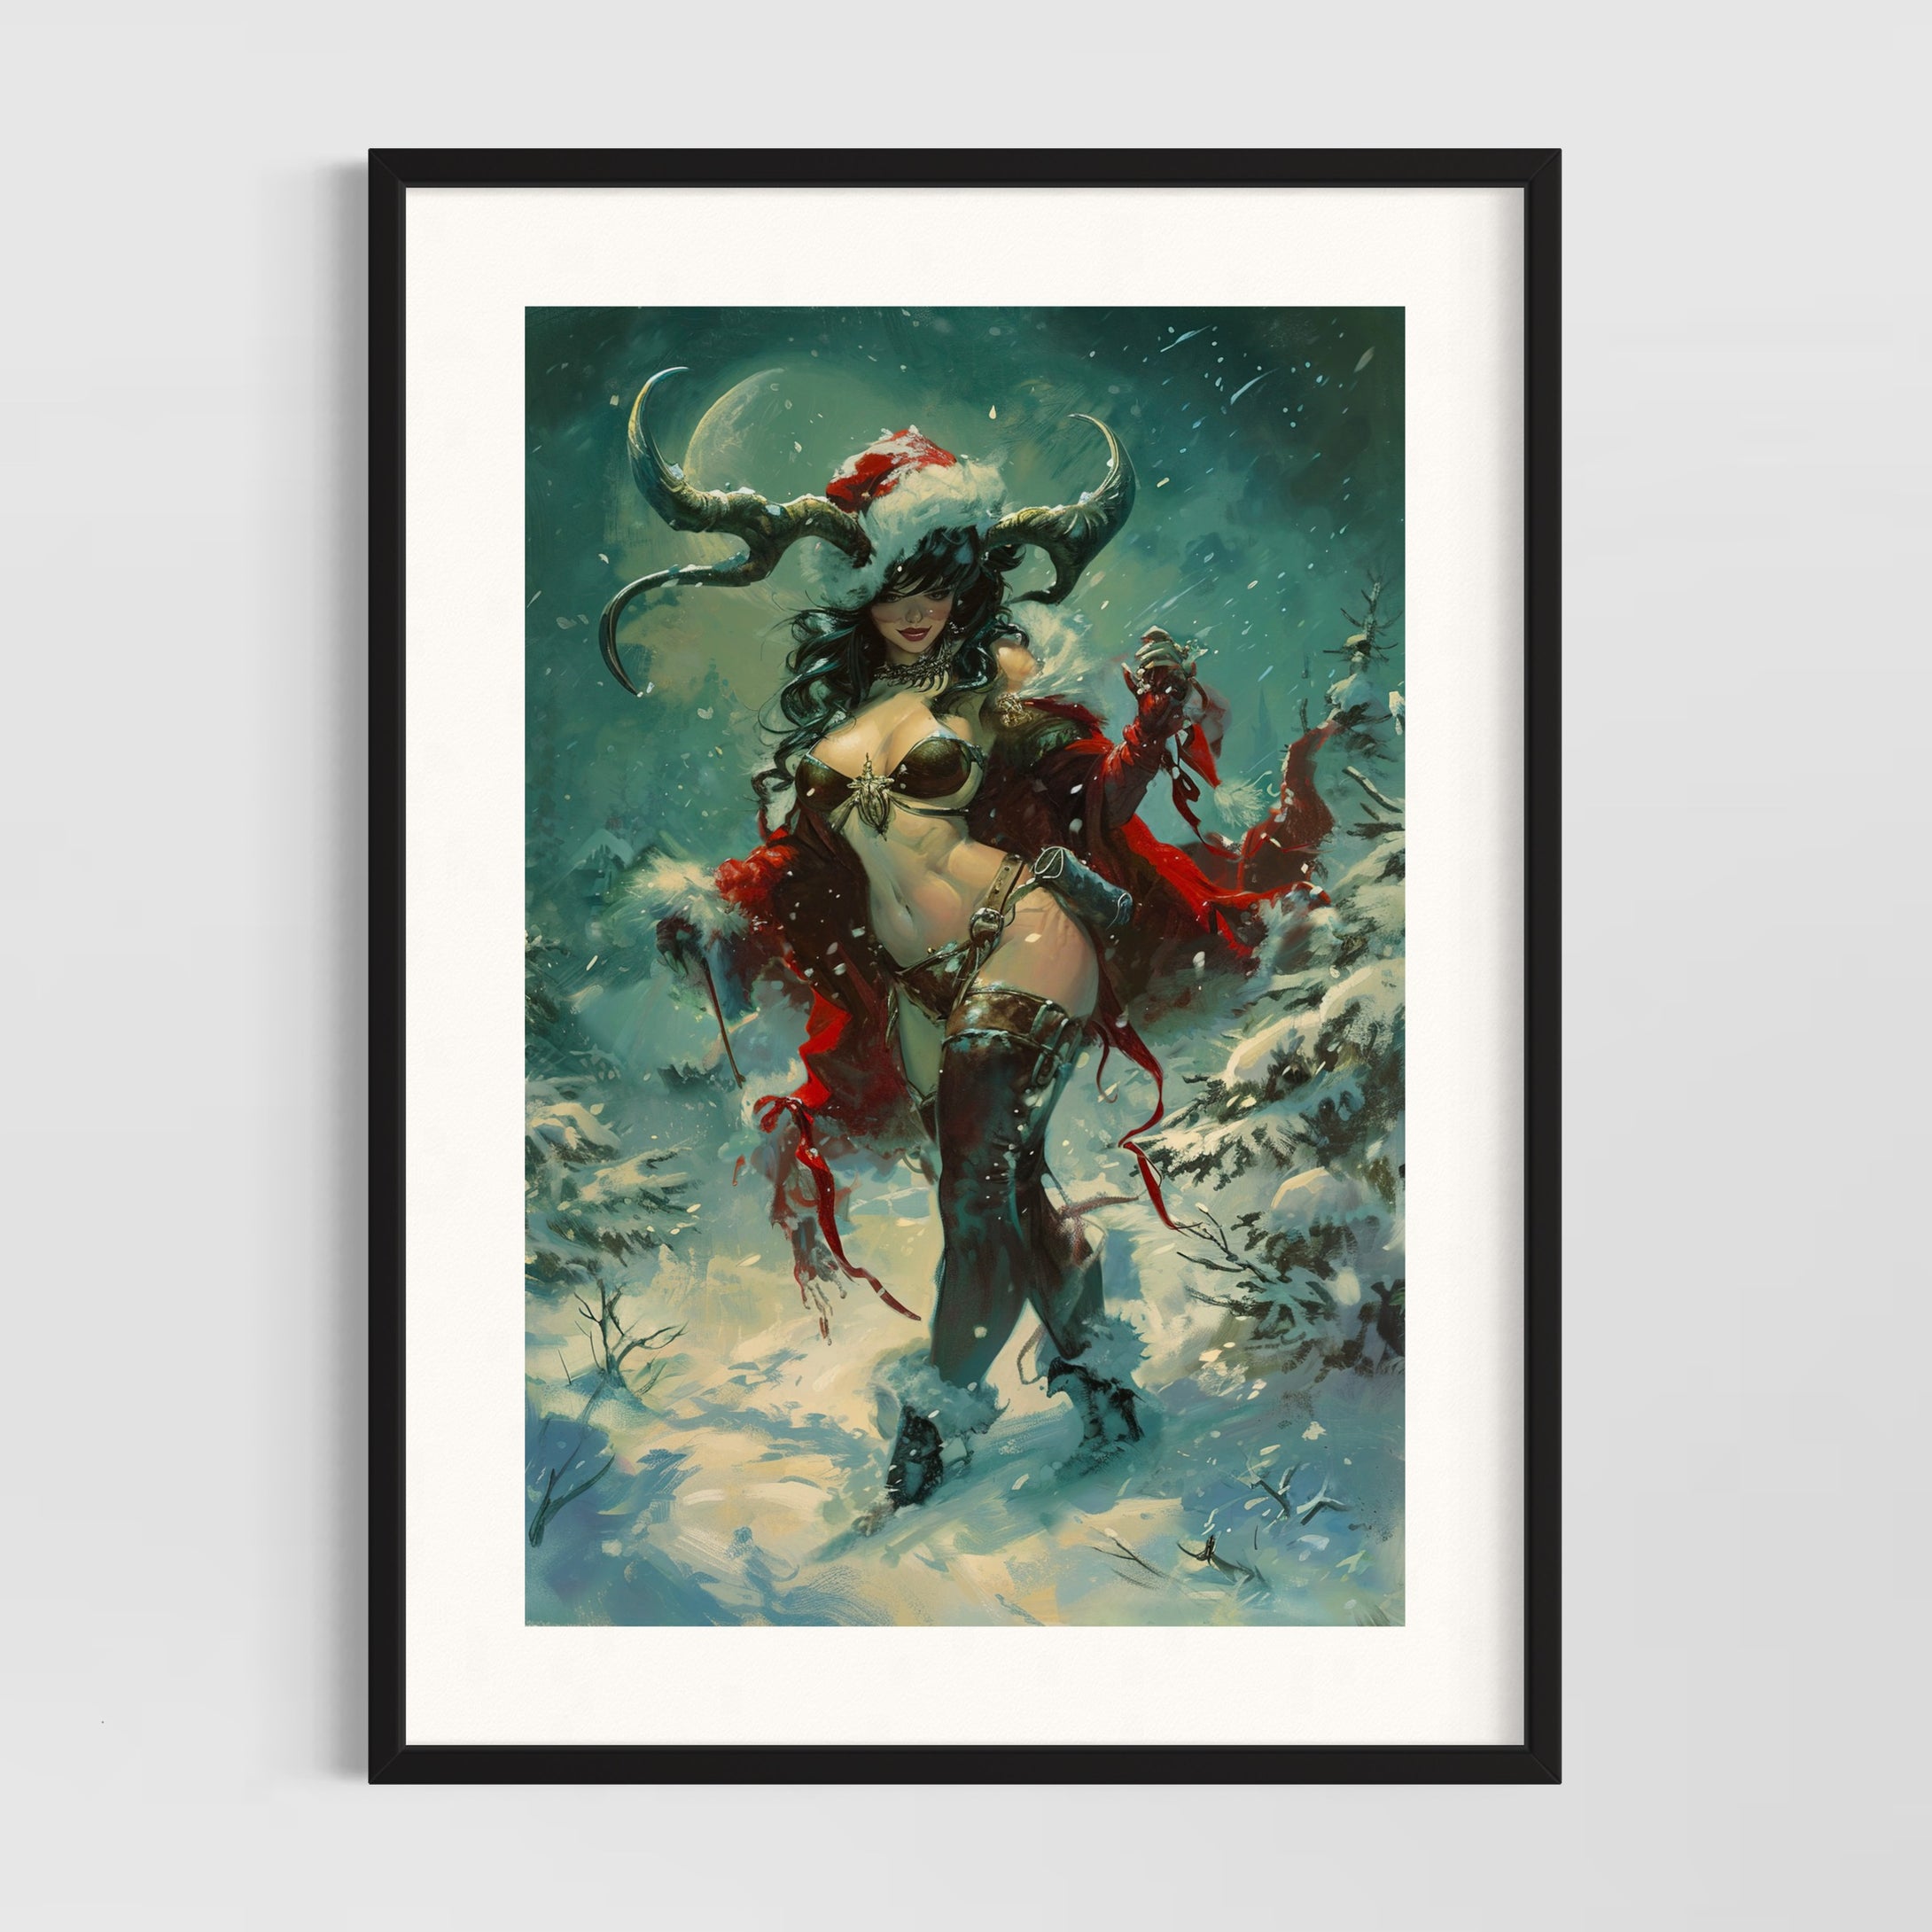 Krampus pinup wall art - Christmas pagan art - original fine art print